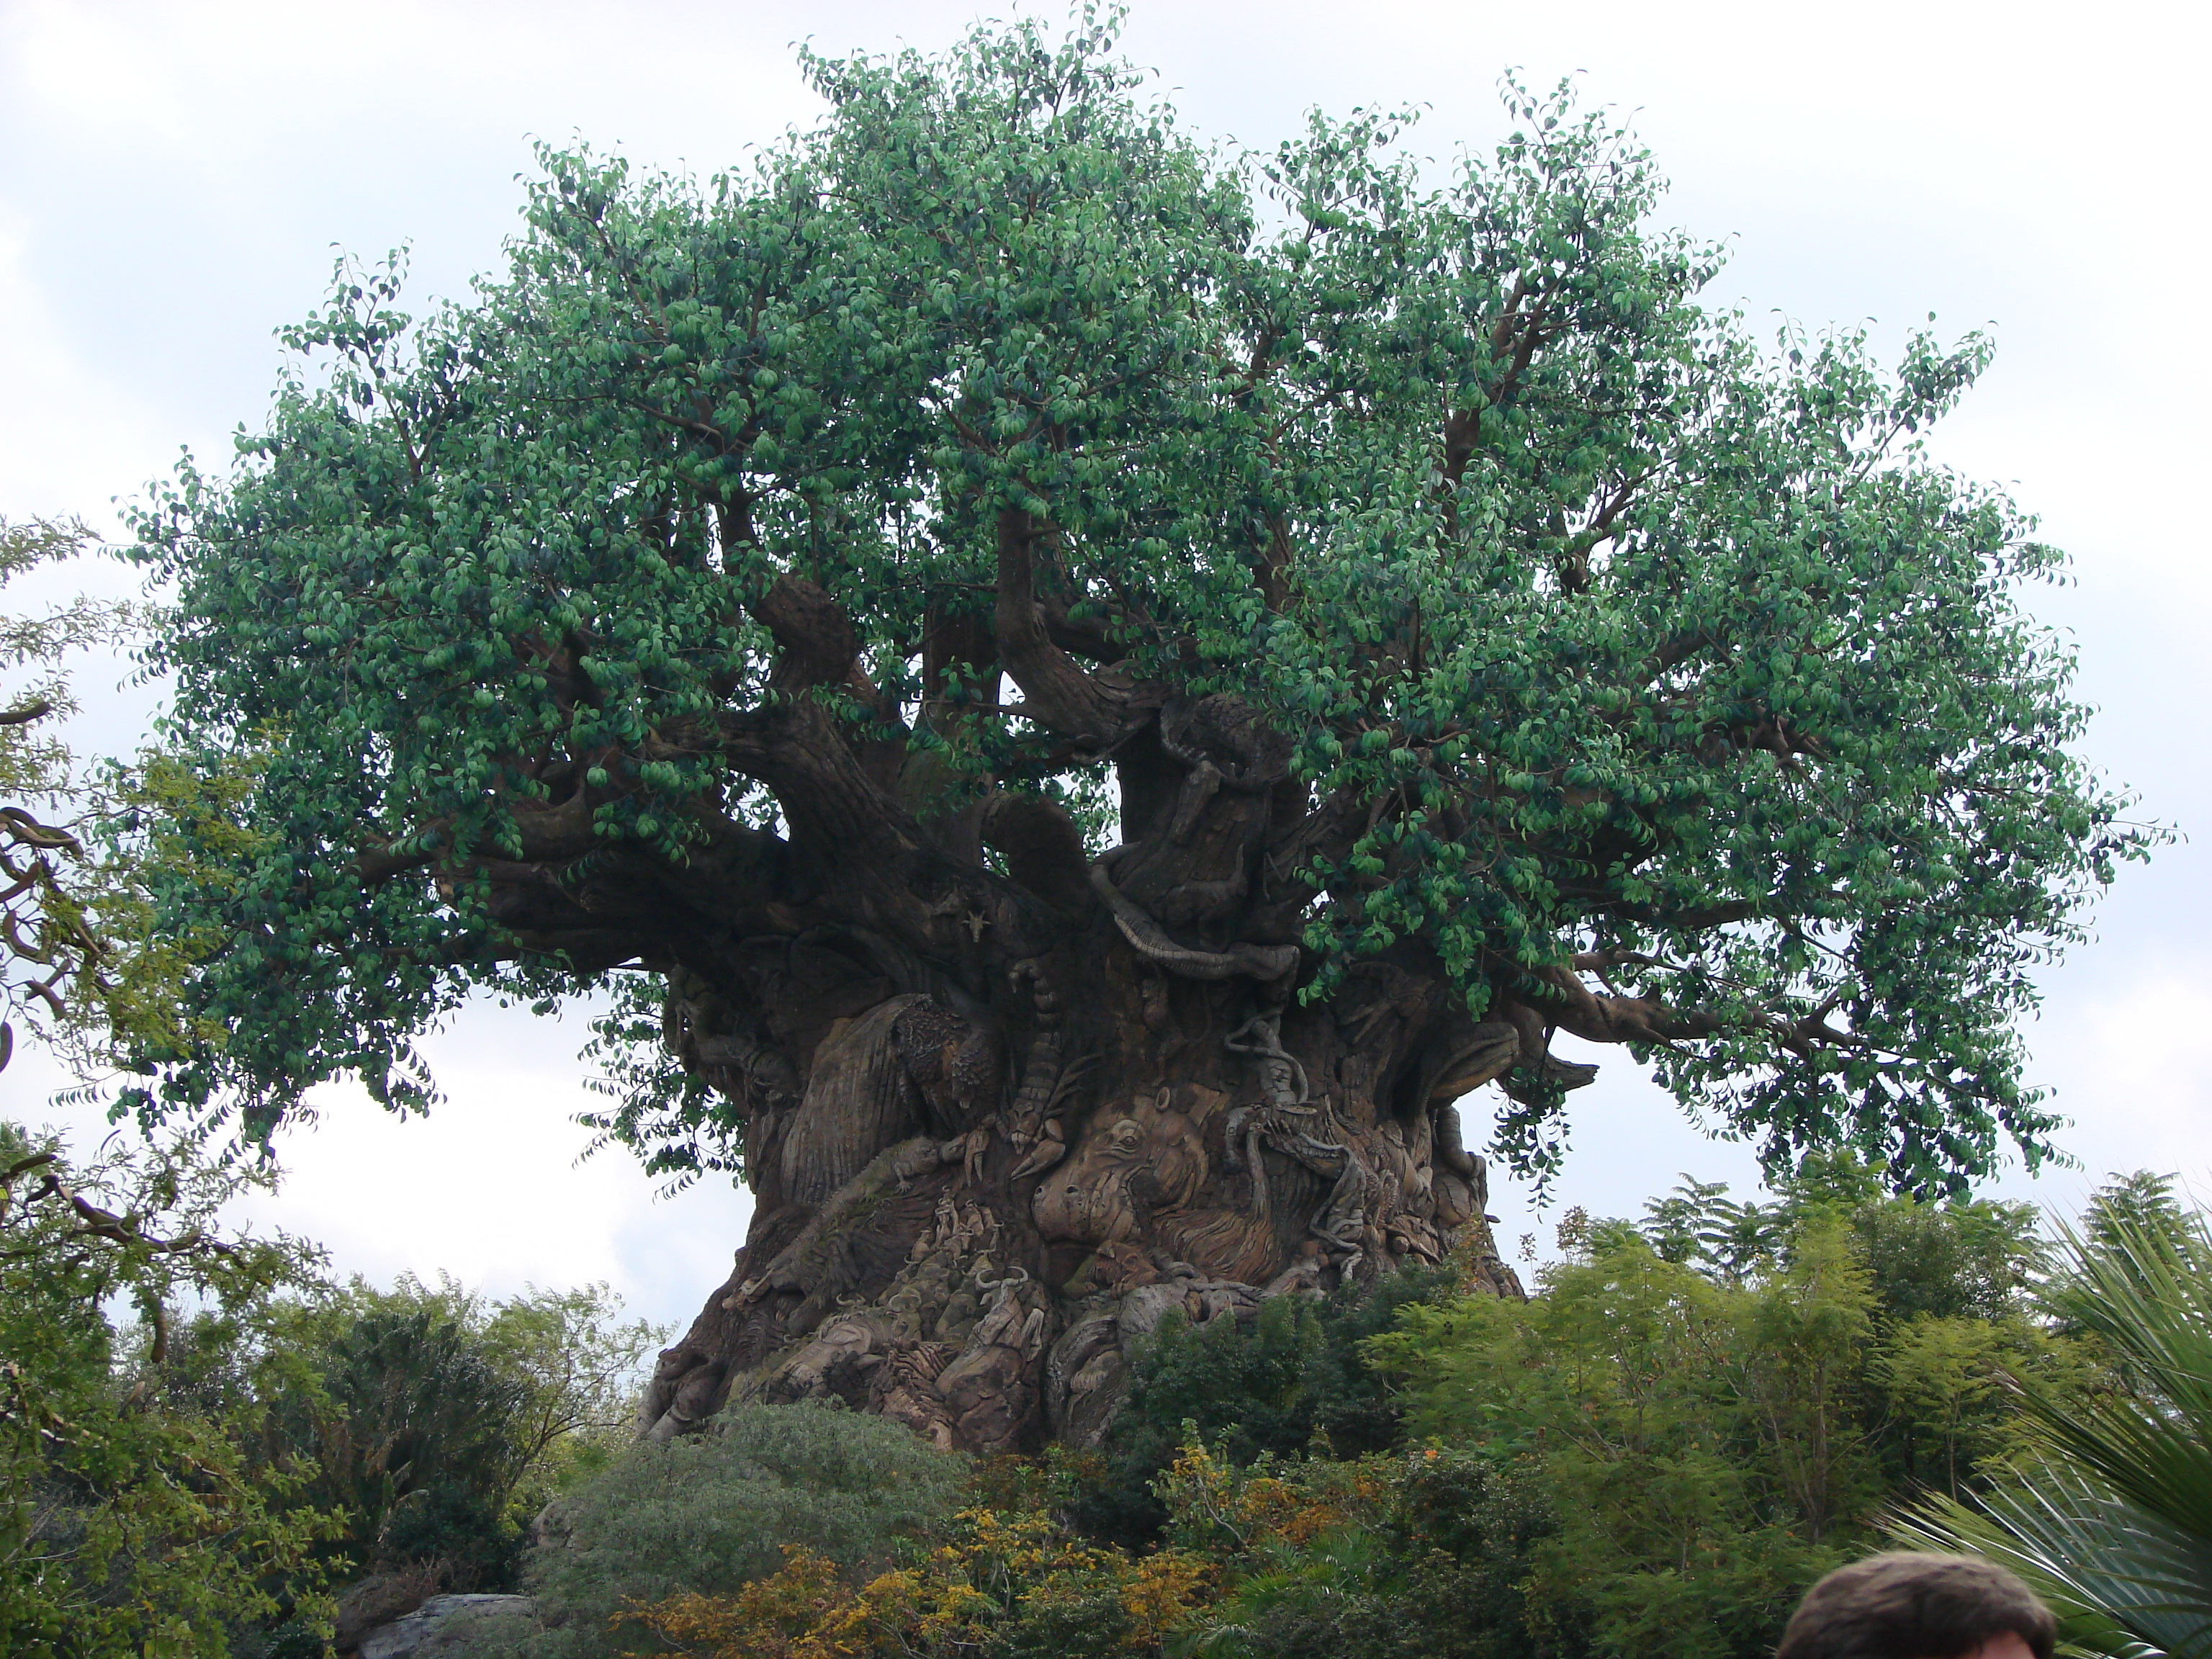 The iconic Tree of Life in Disney's Animal Kingdom!